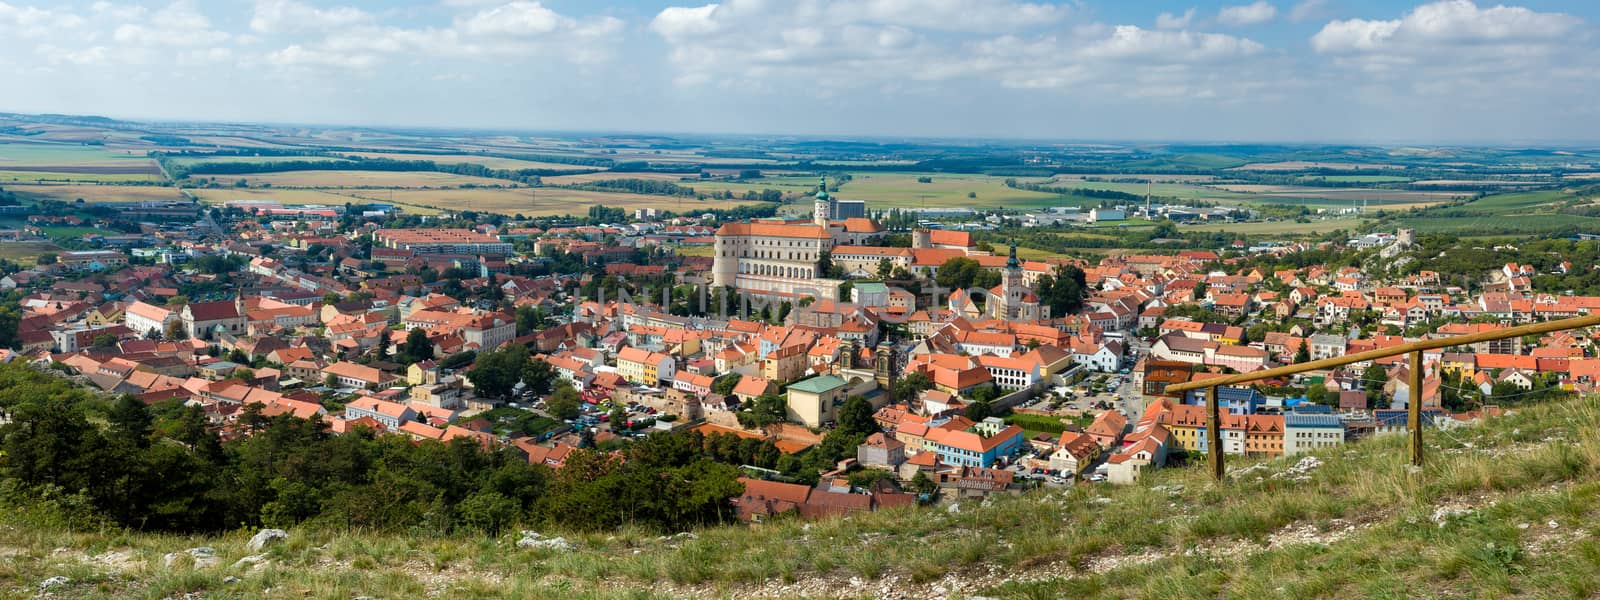 panorama of Mikulov town, South Moravia, Czech Republic by artush